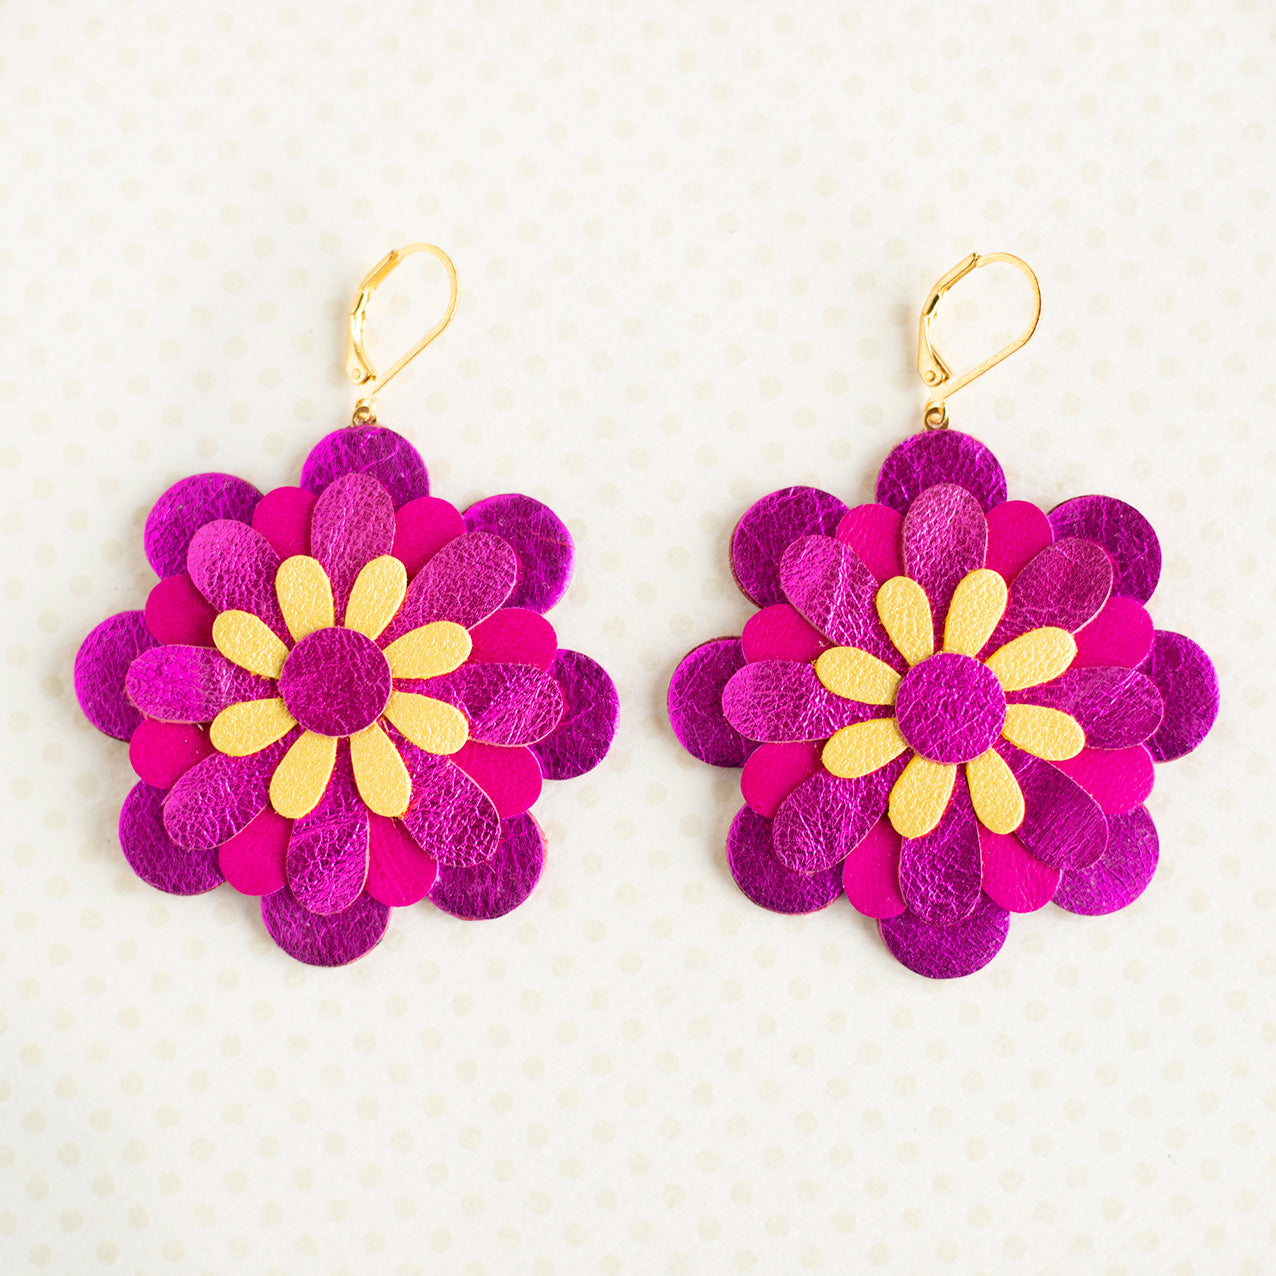 Zinnia flower earrings - metallic fuchsia pink leather